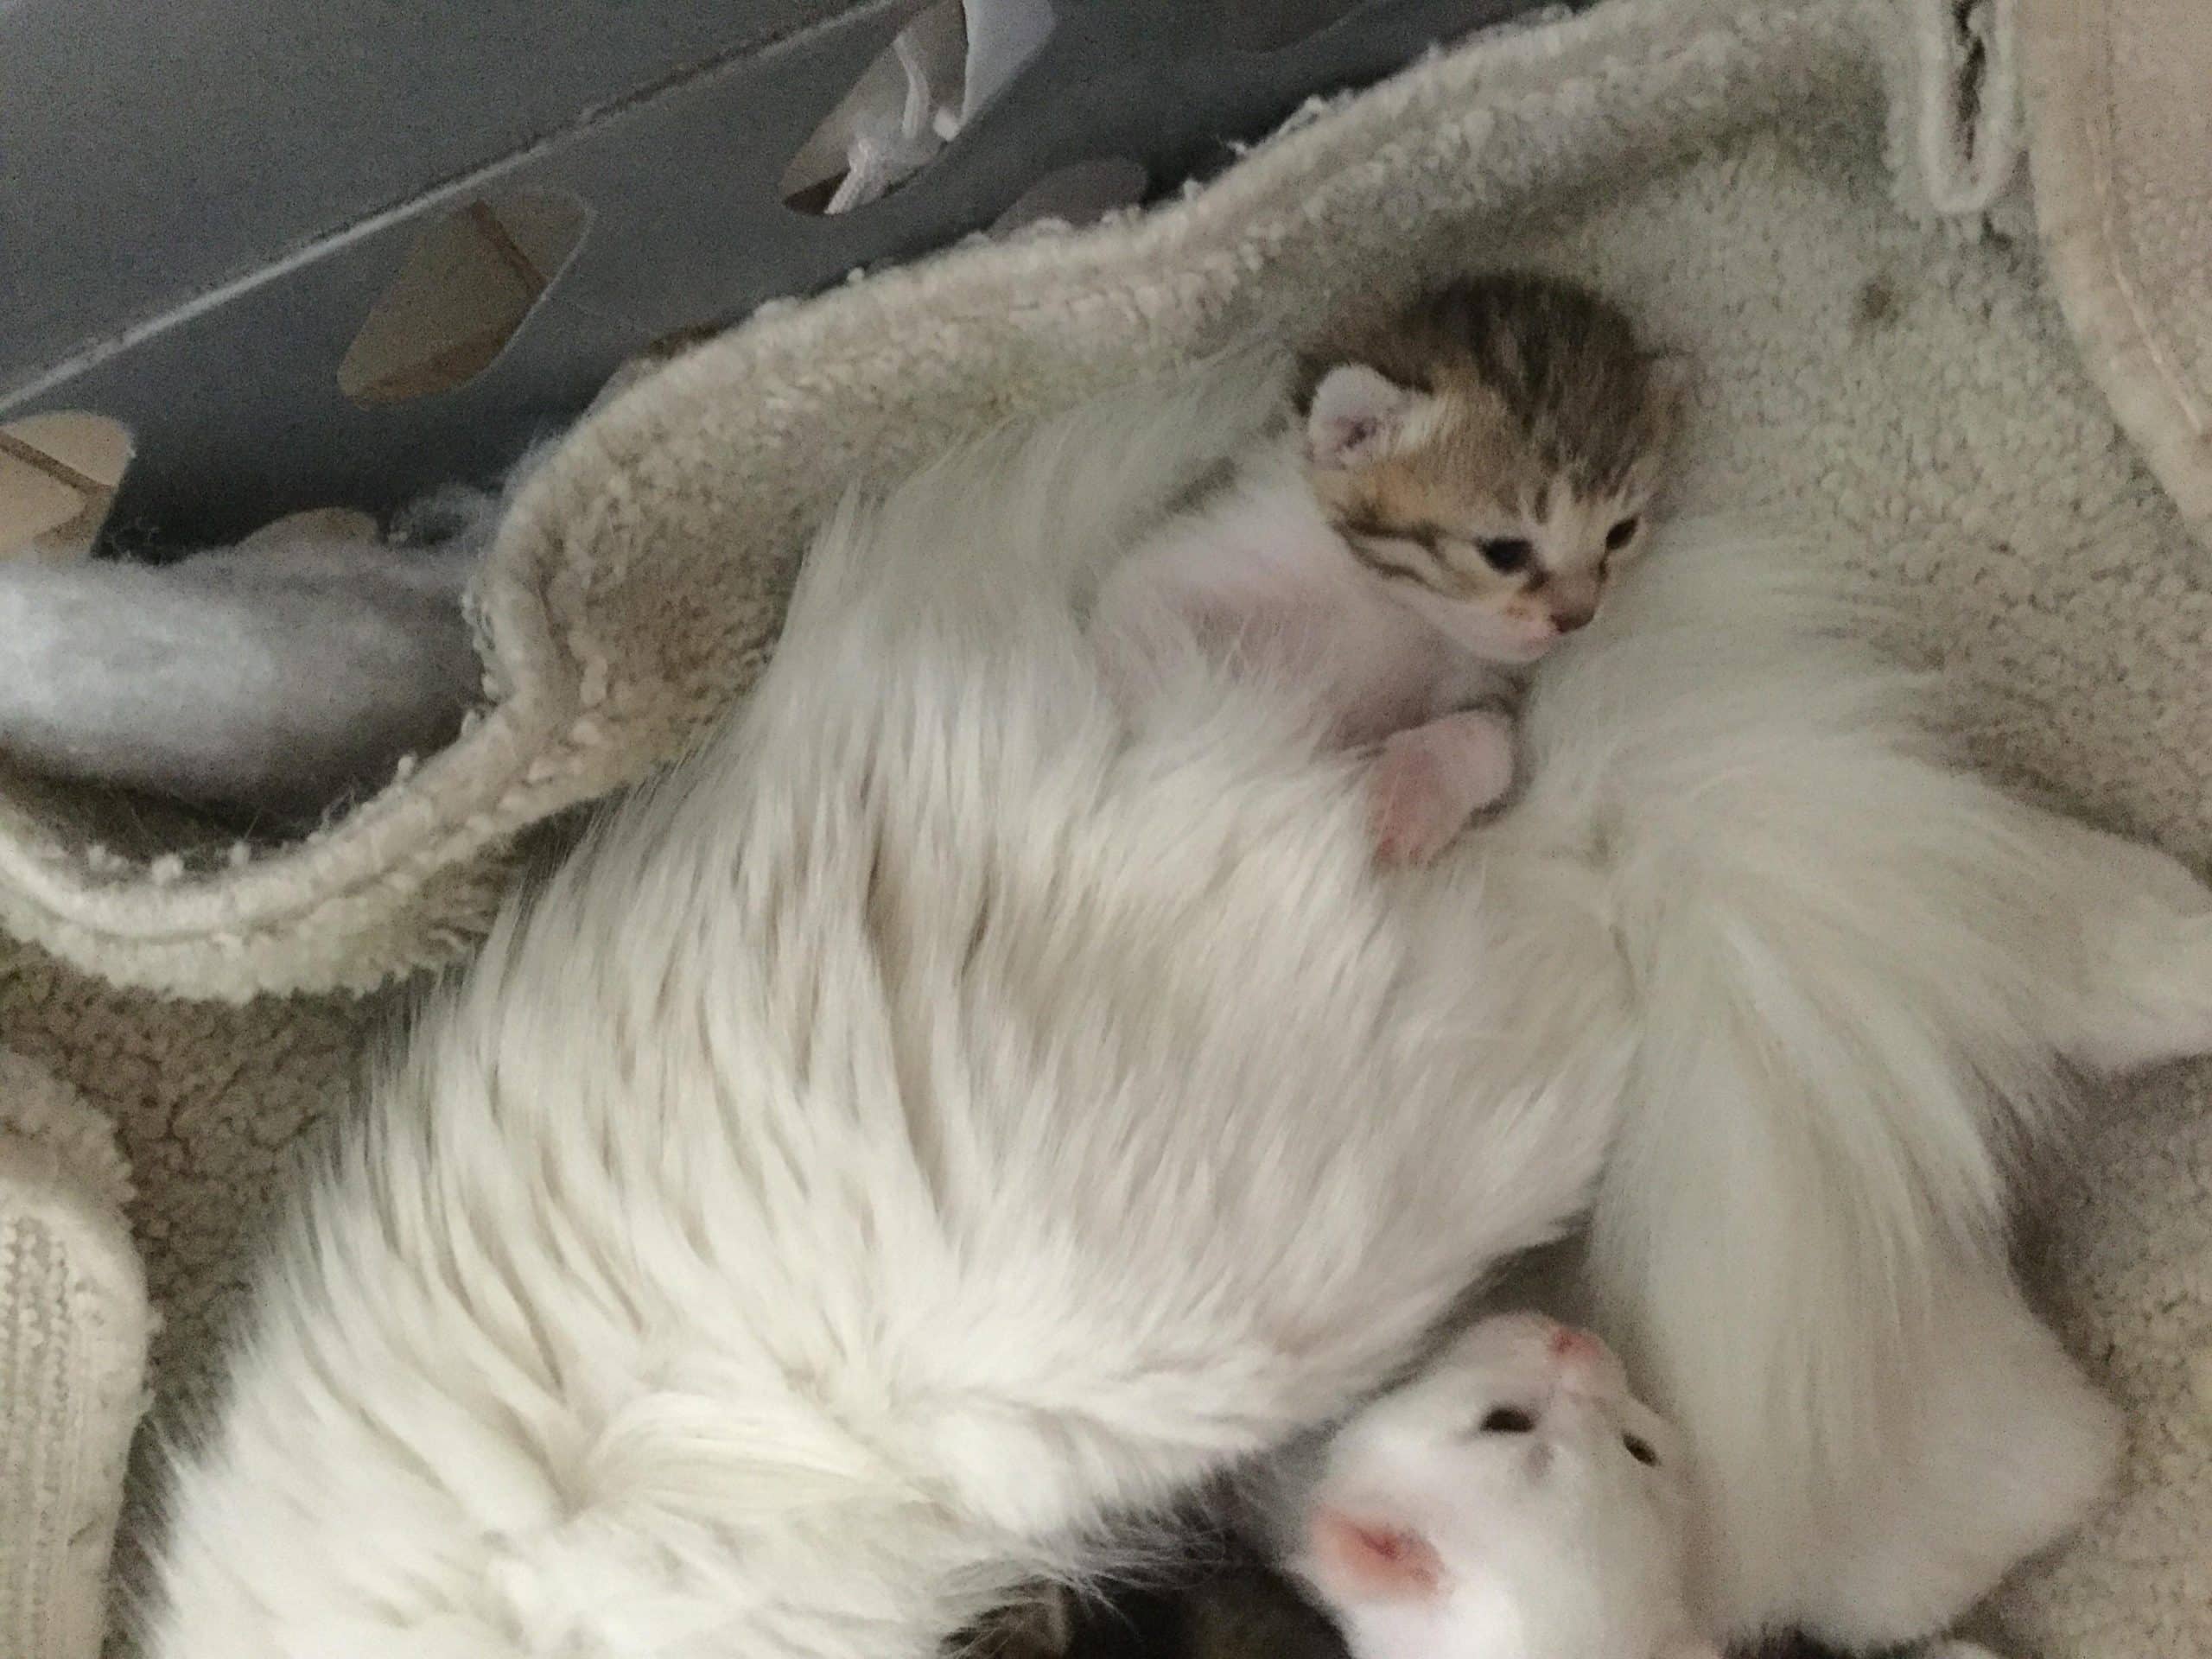 1 week old kittens : aww